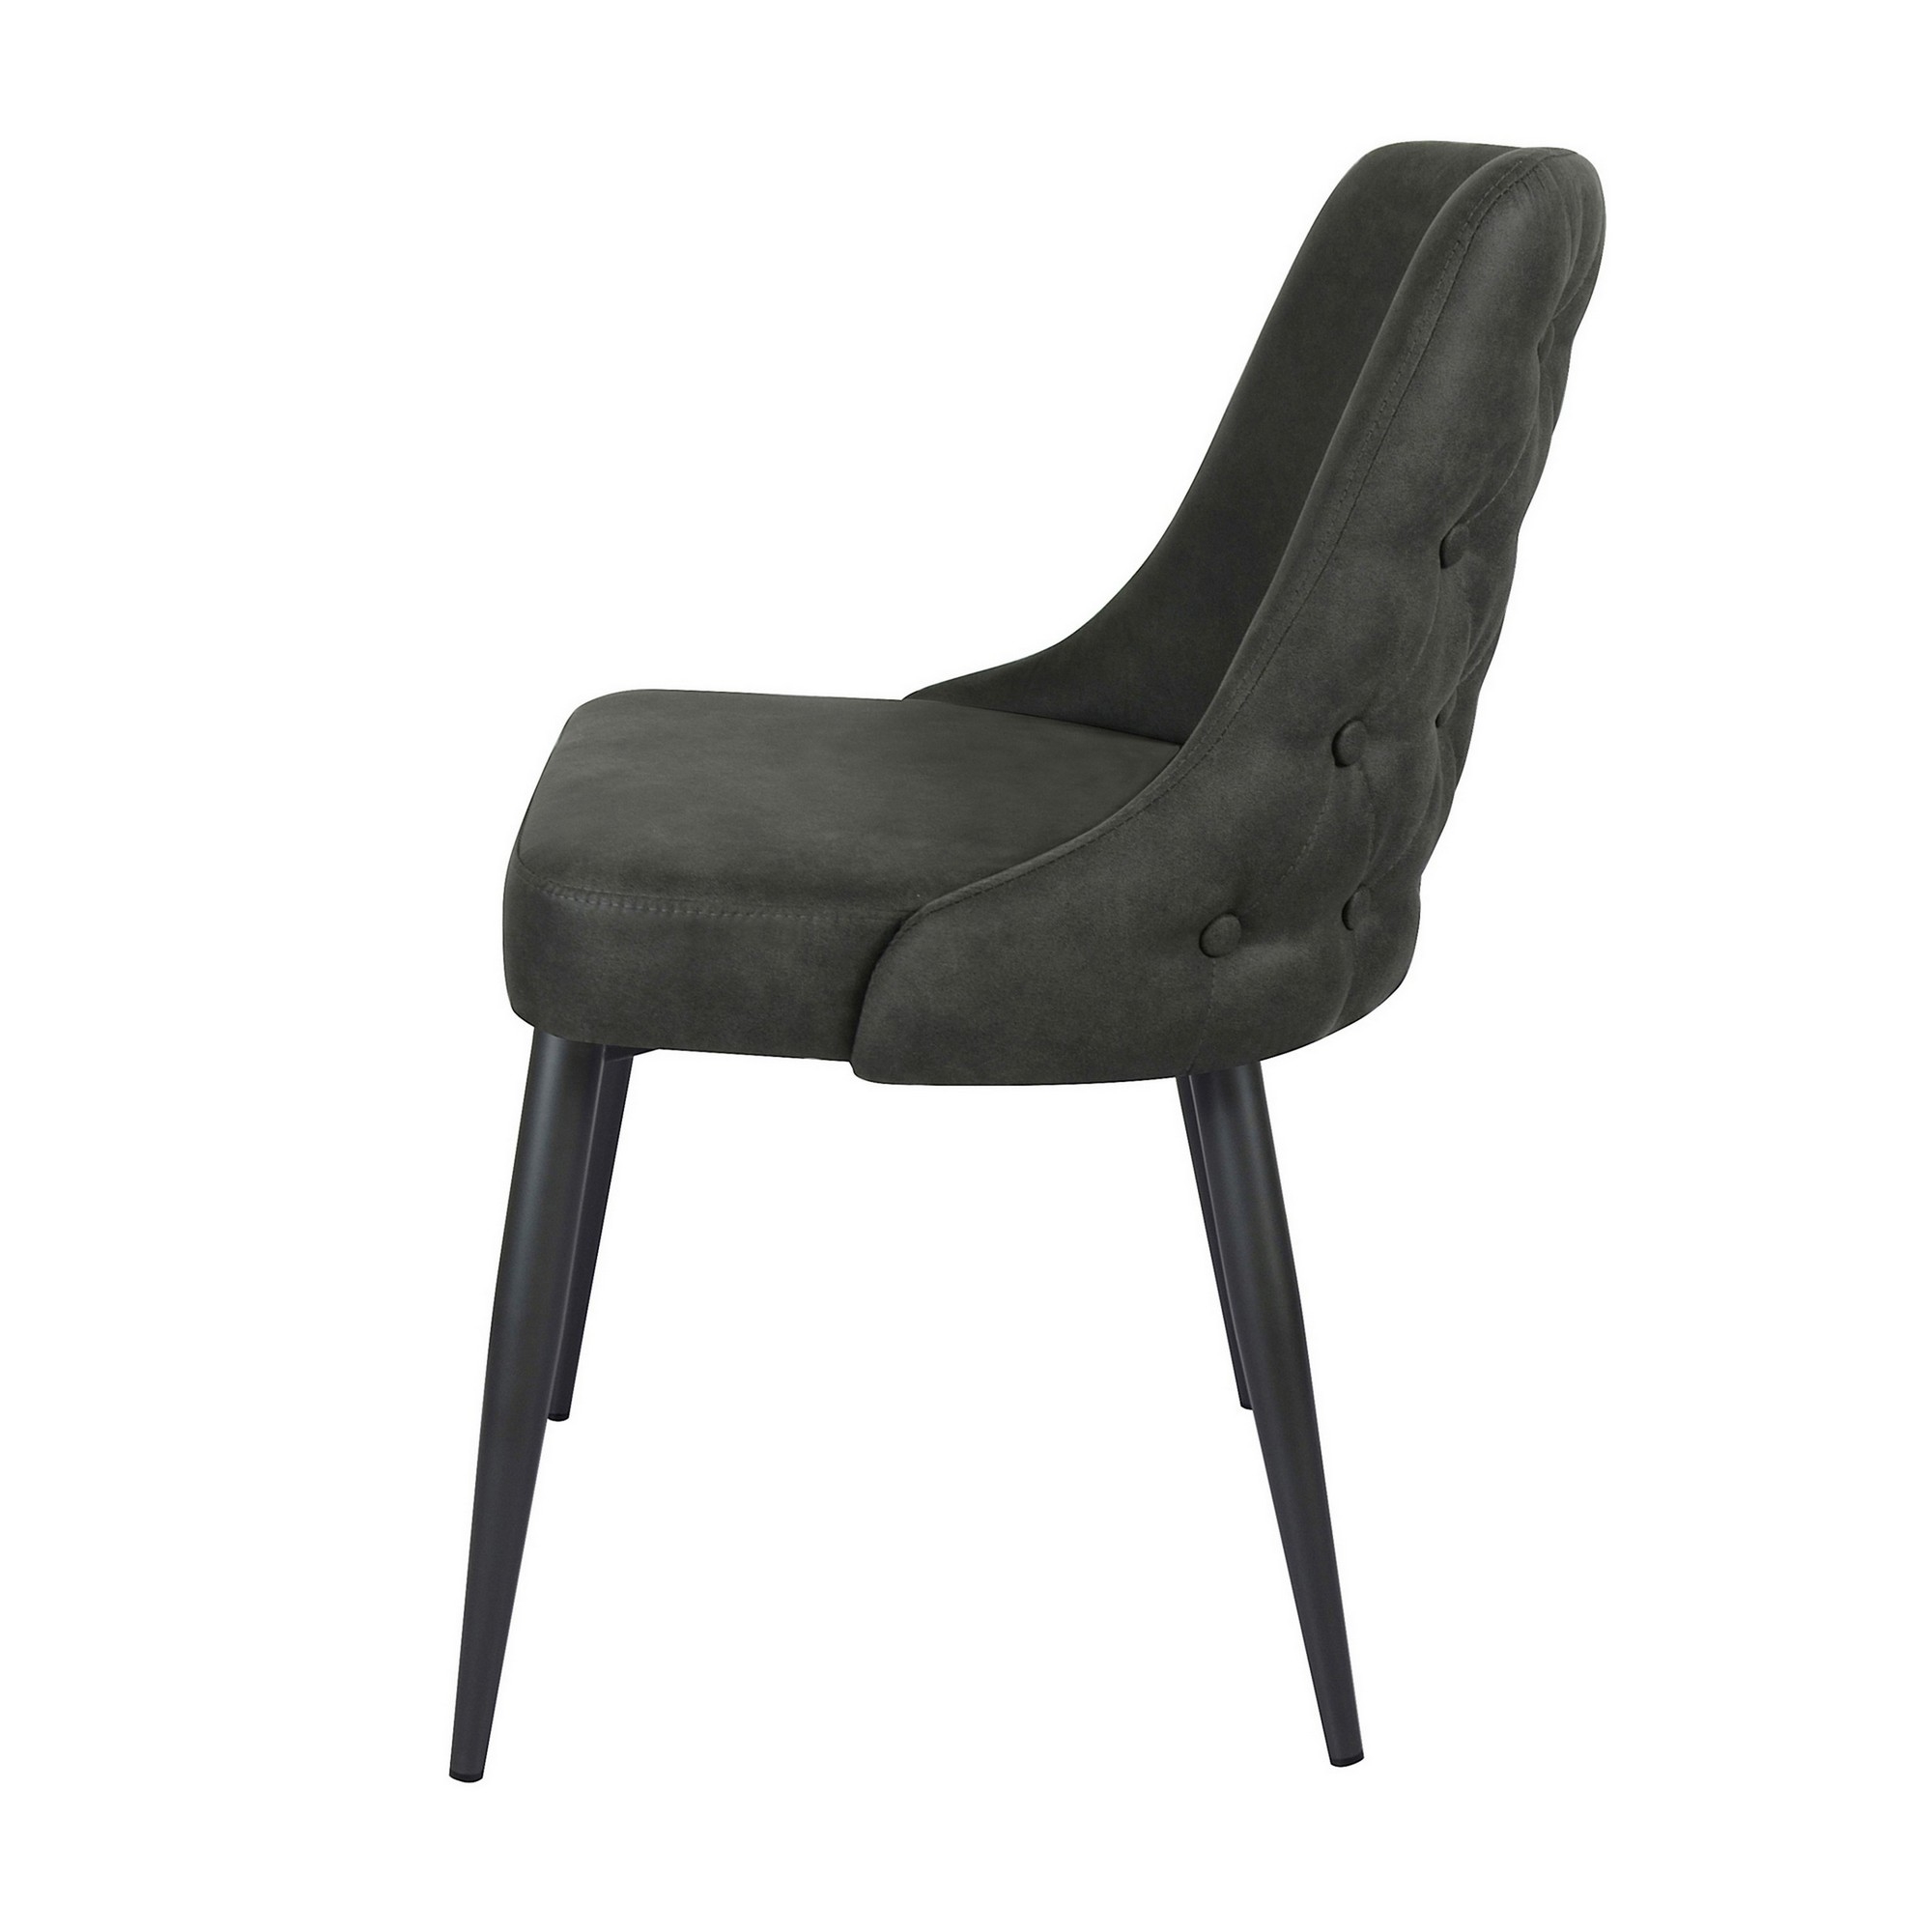 Glom 21 Inch Dining Chair, Set Of 2, Gray Upholstery, Tufted Backrest - Saltoro Sherpi